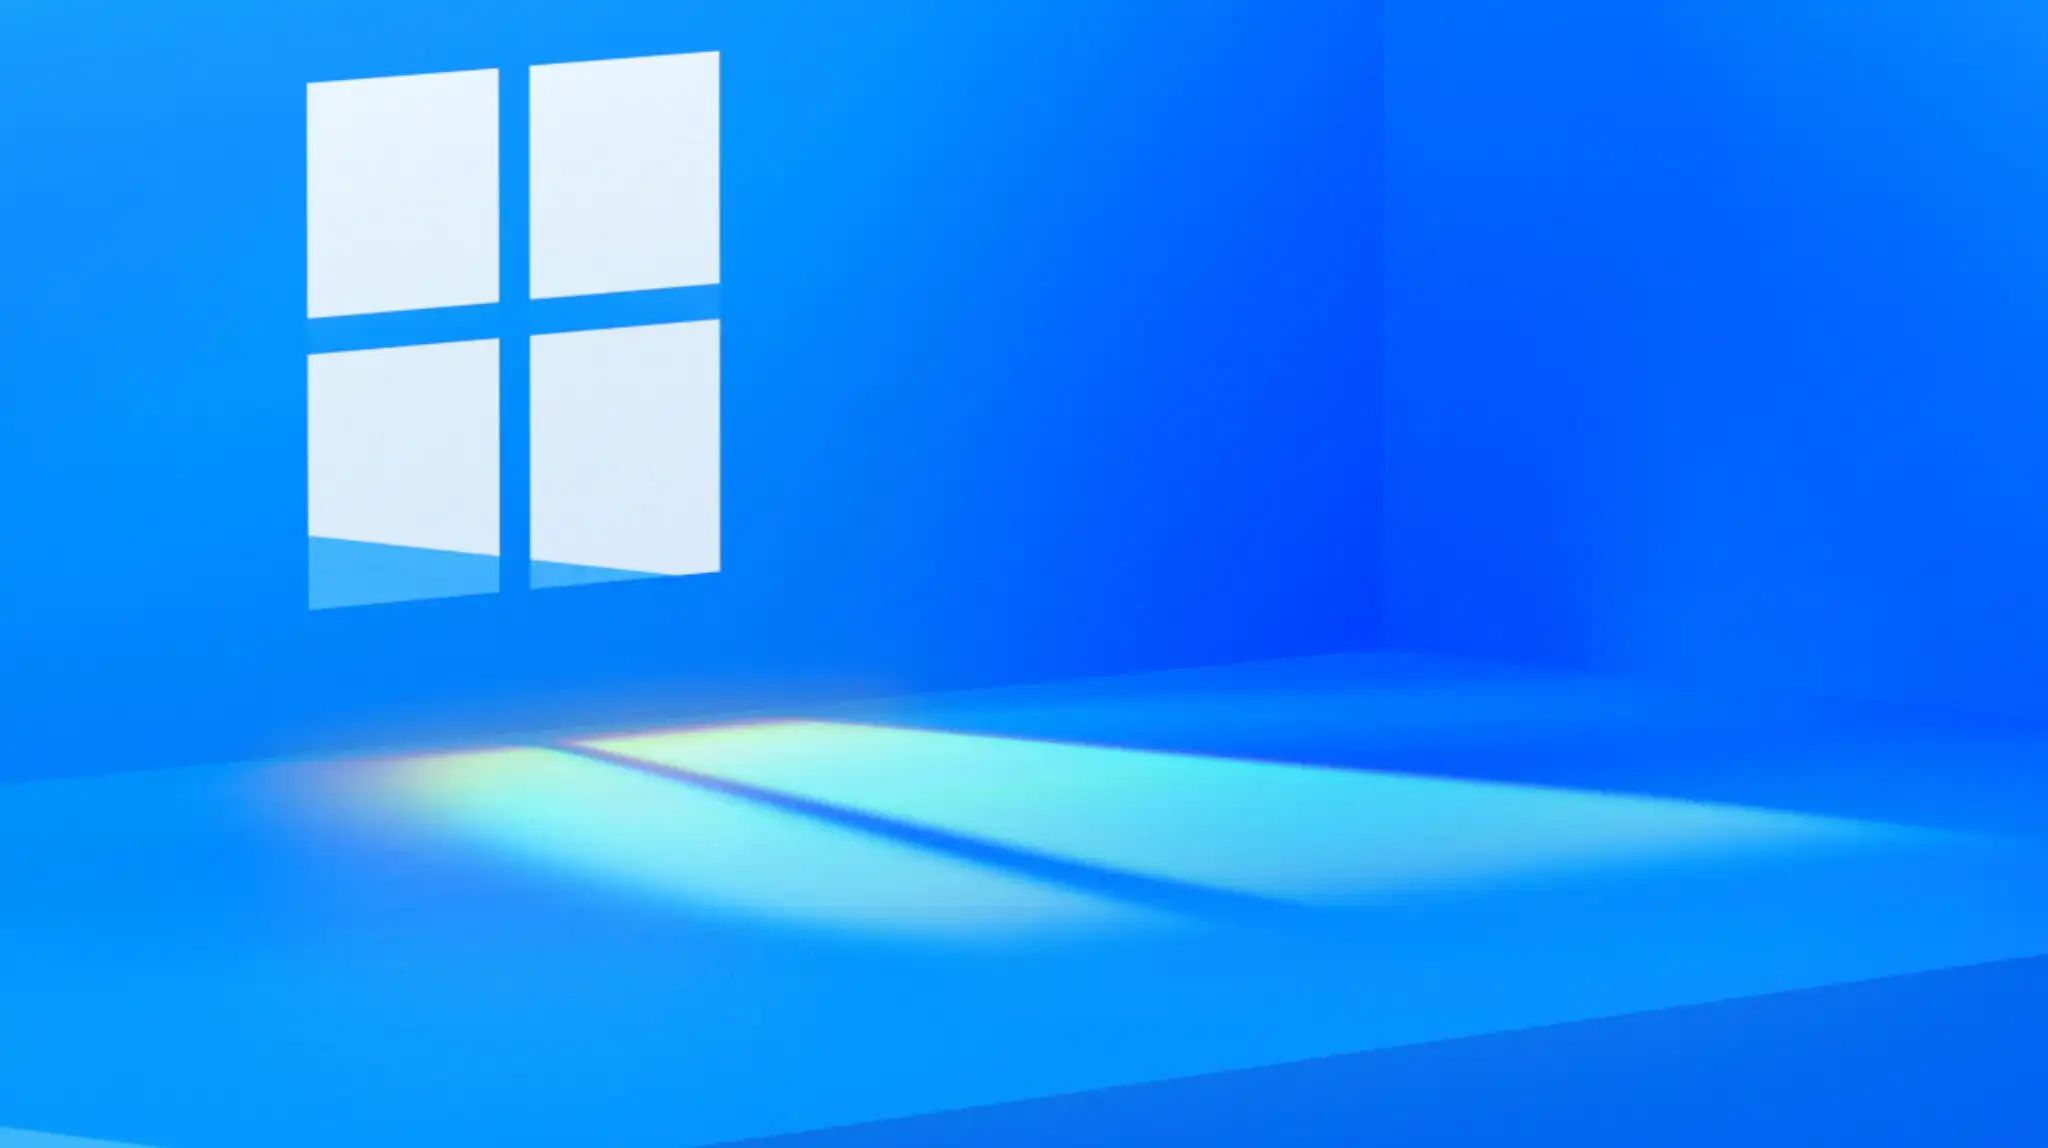 How to make Windows 11 look like Windows 10